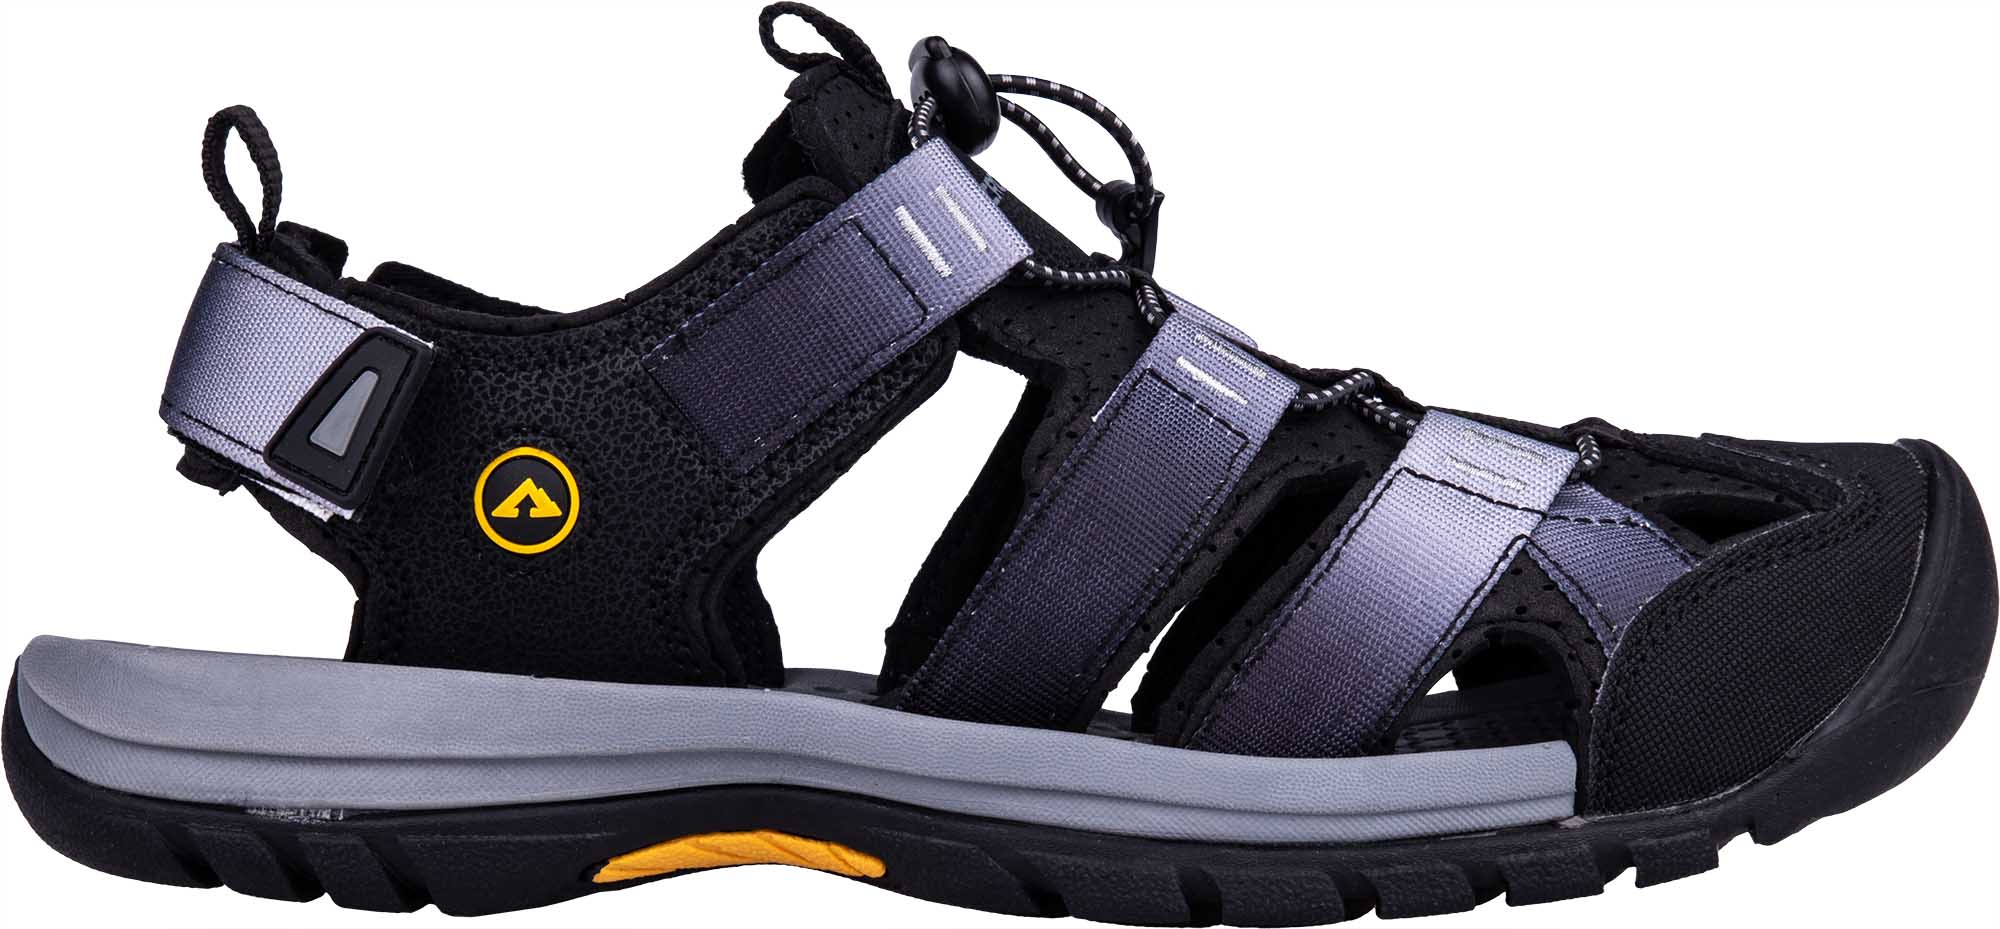 Men’s sandals